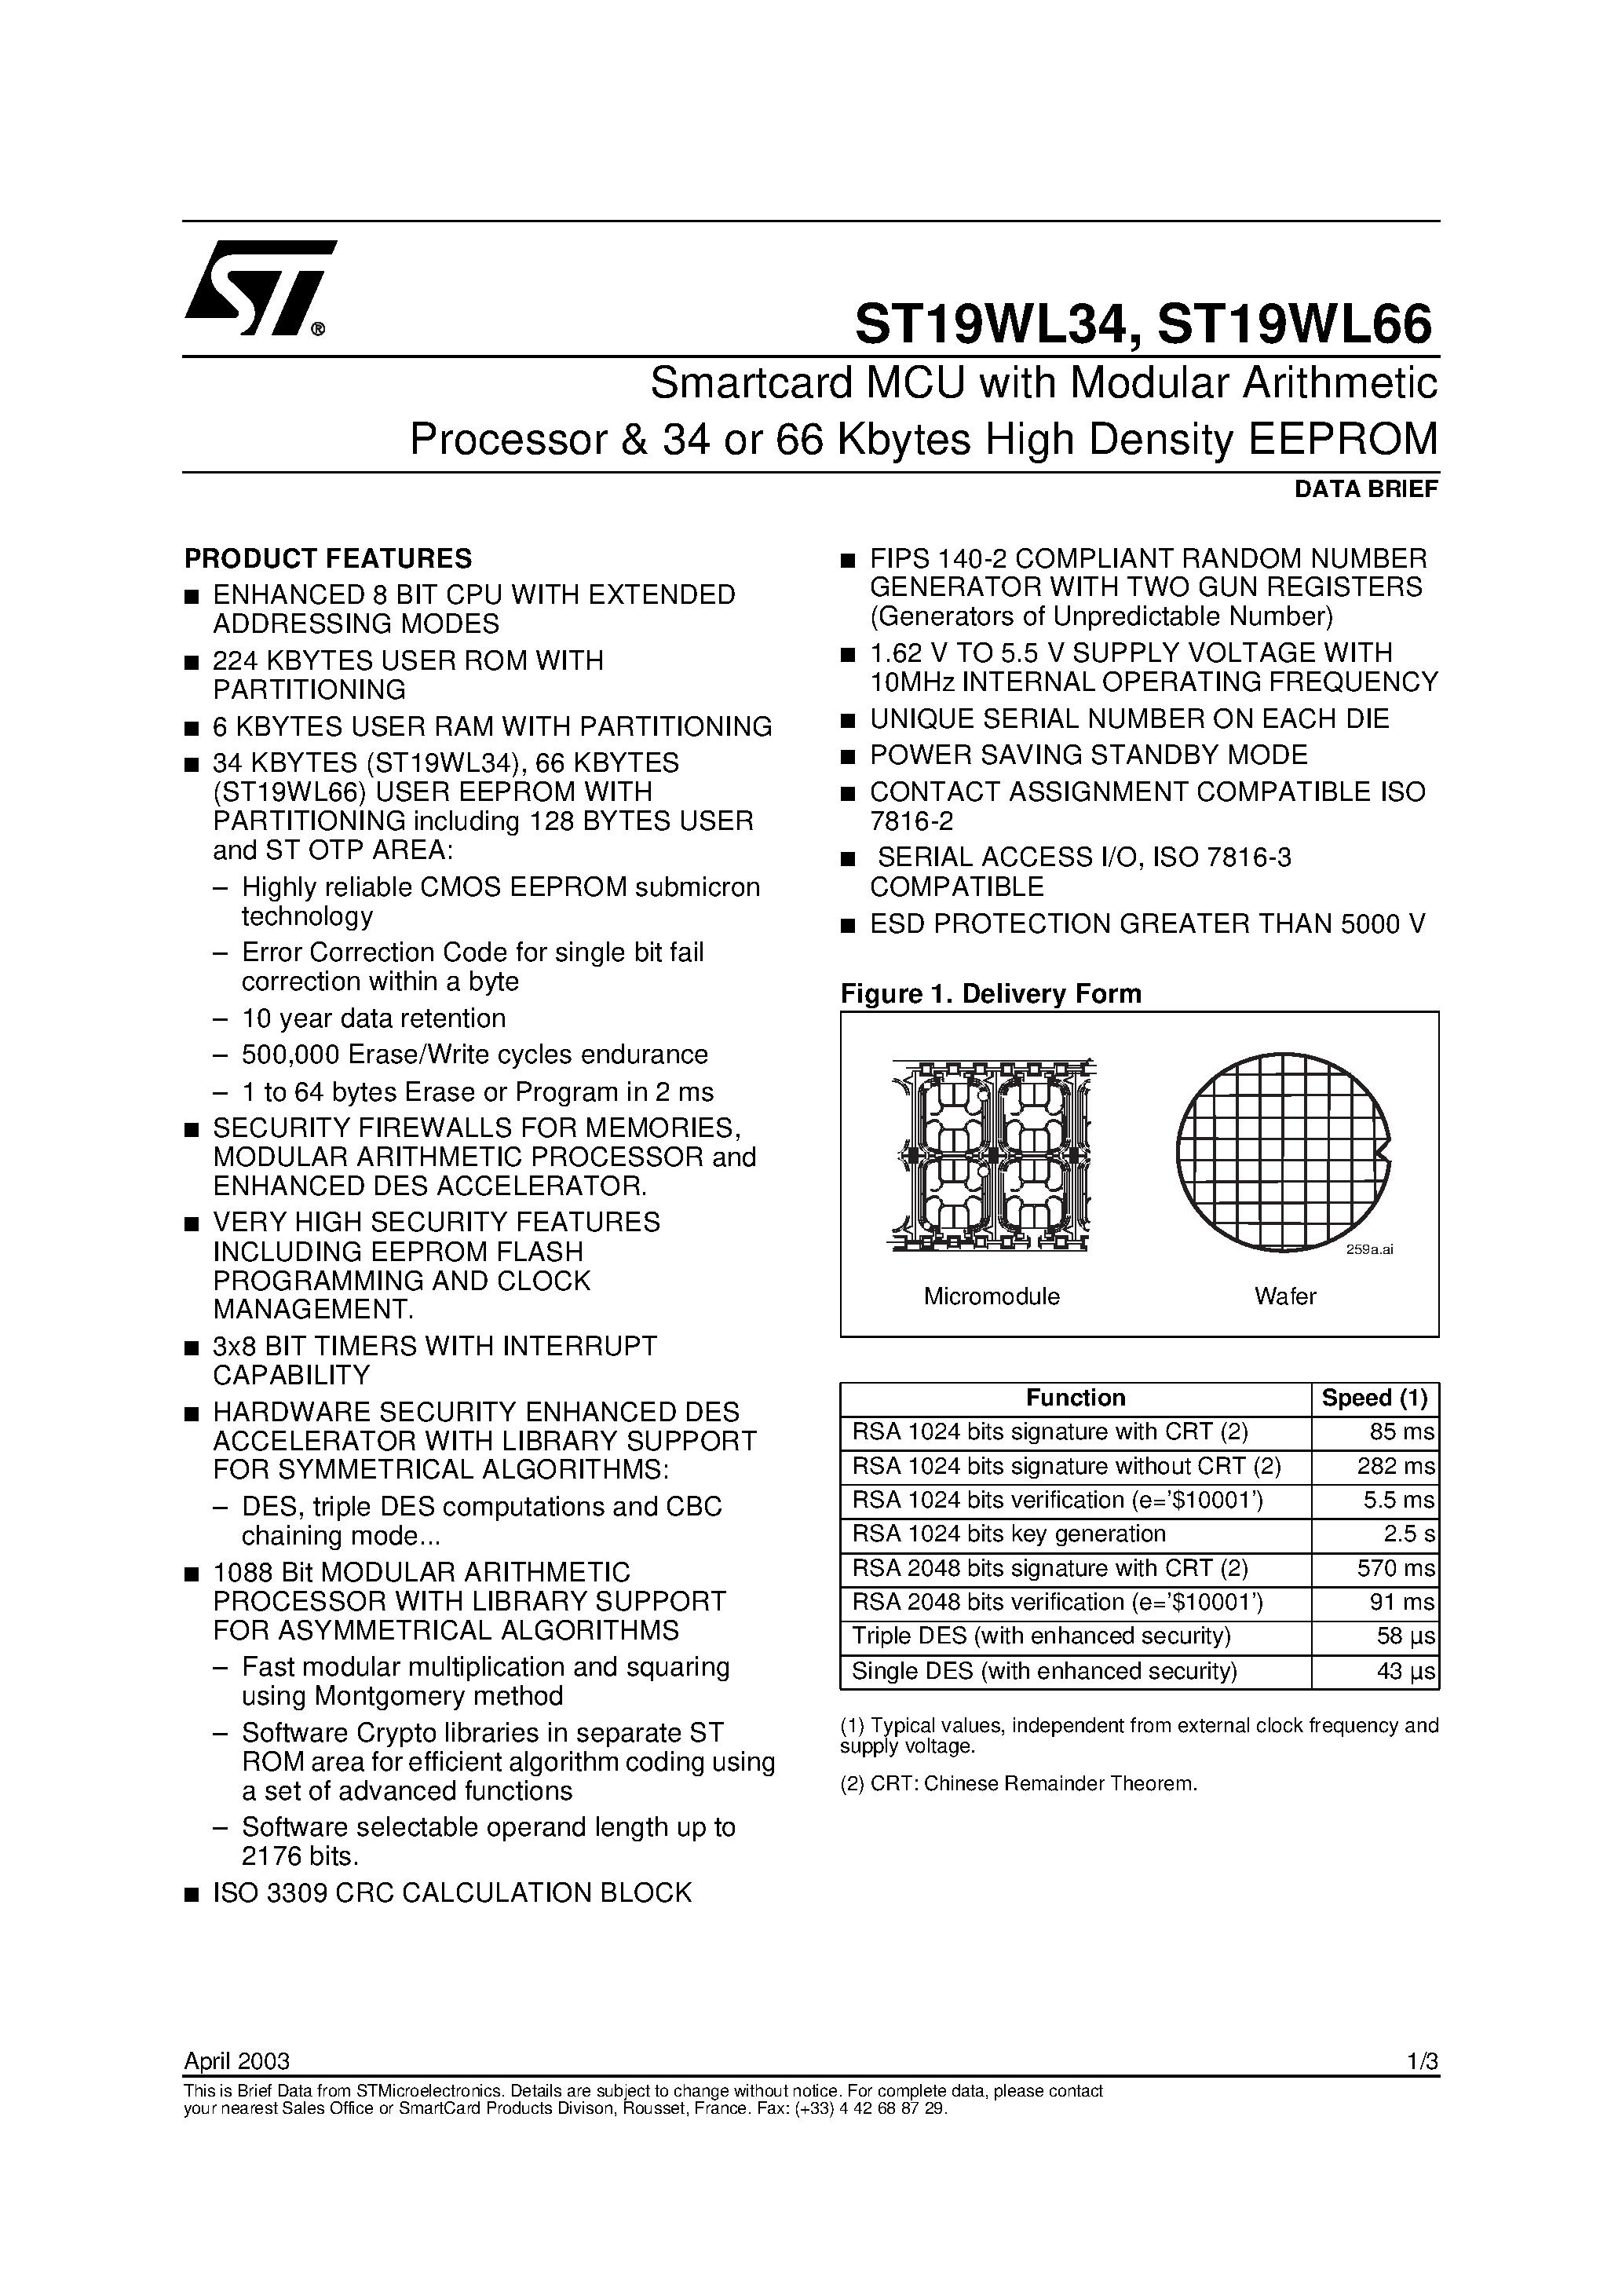 Даташит ST19WL34 - (ST19WL34 / ST19WL66) Smartcard MCU with Modular Arithmetic Processor & 34 or 66 Kbytes High Density EEROM страница 1